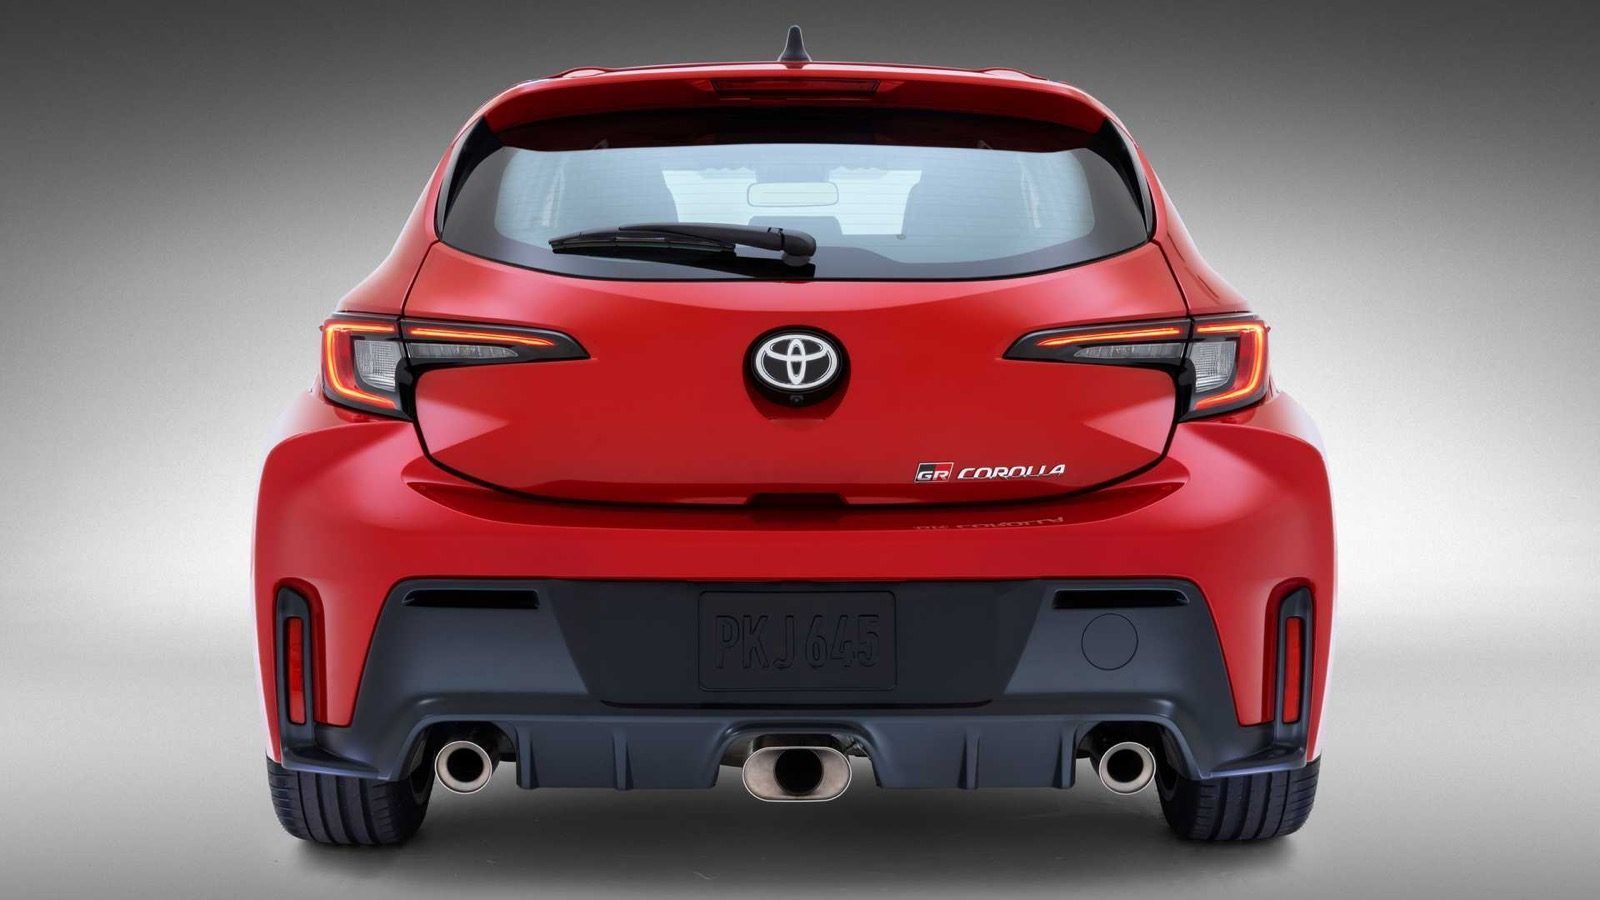 Waar kunnen we de Toyota GR Corolla straks spotten?